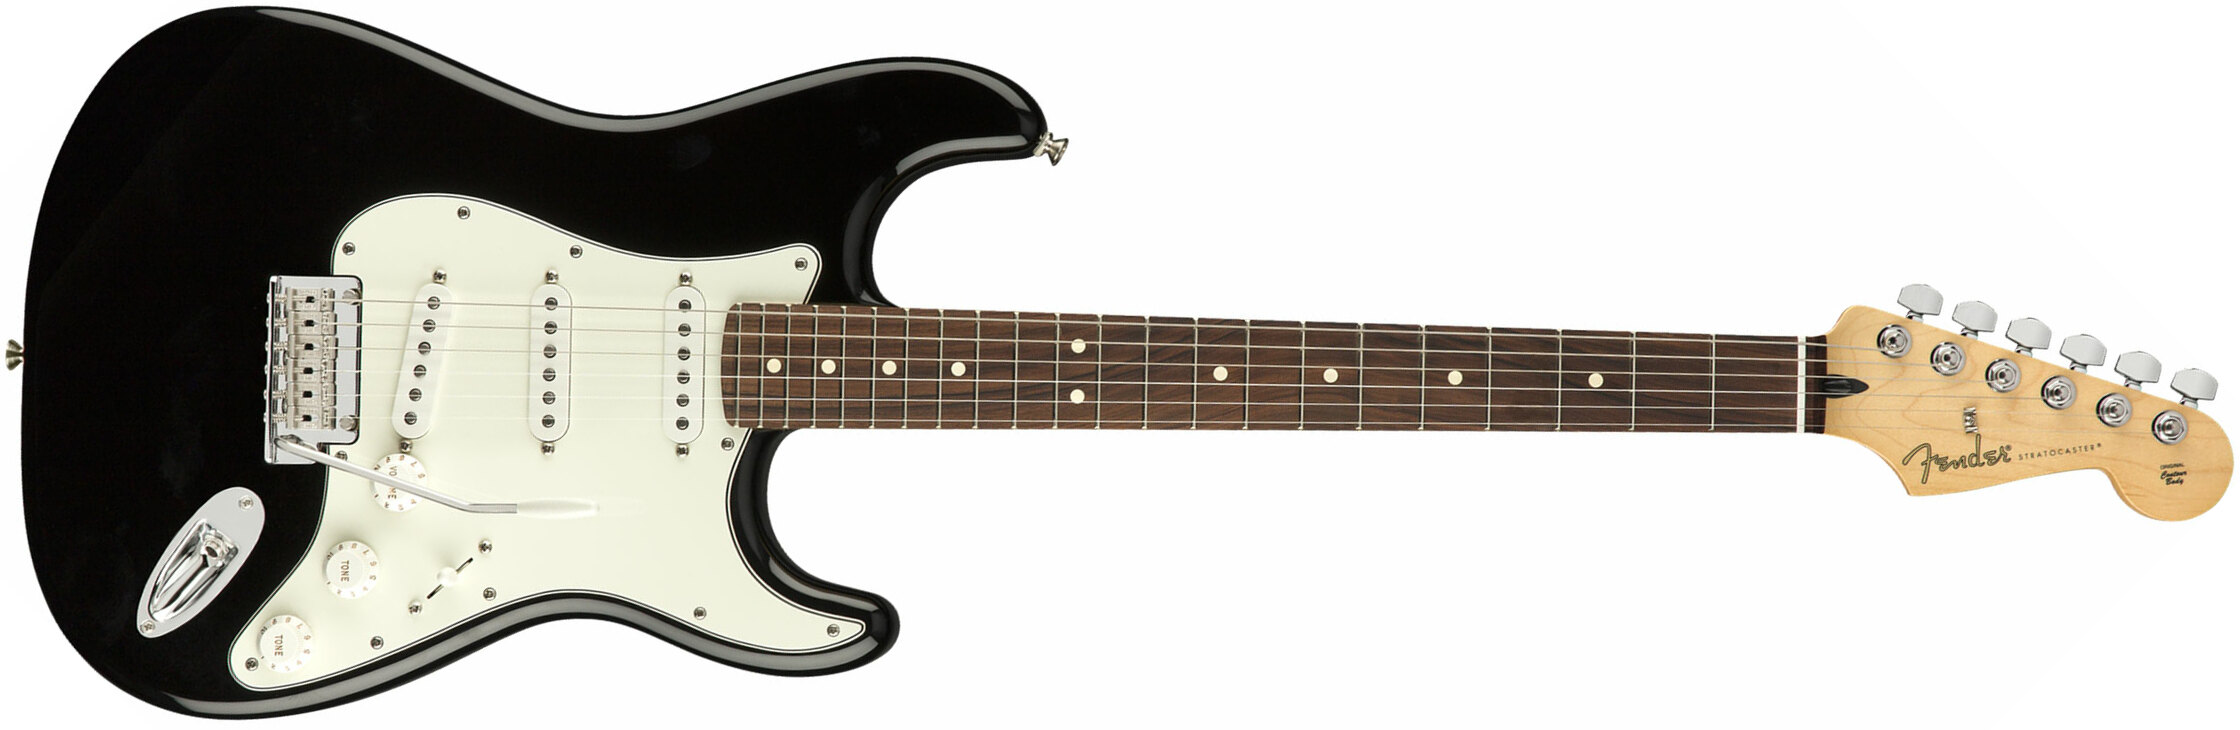 Fender Strat Player Mex Sss Pf - Black - Str shape electric guitar - Main picture